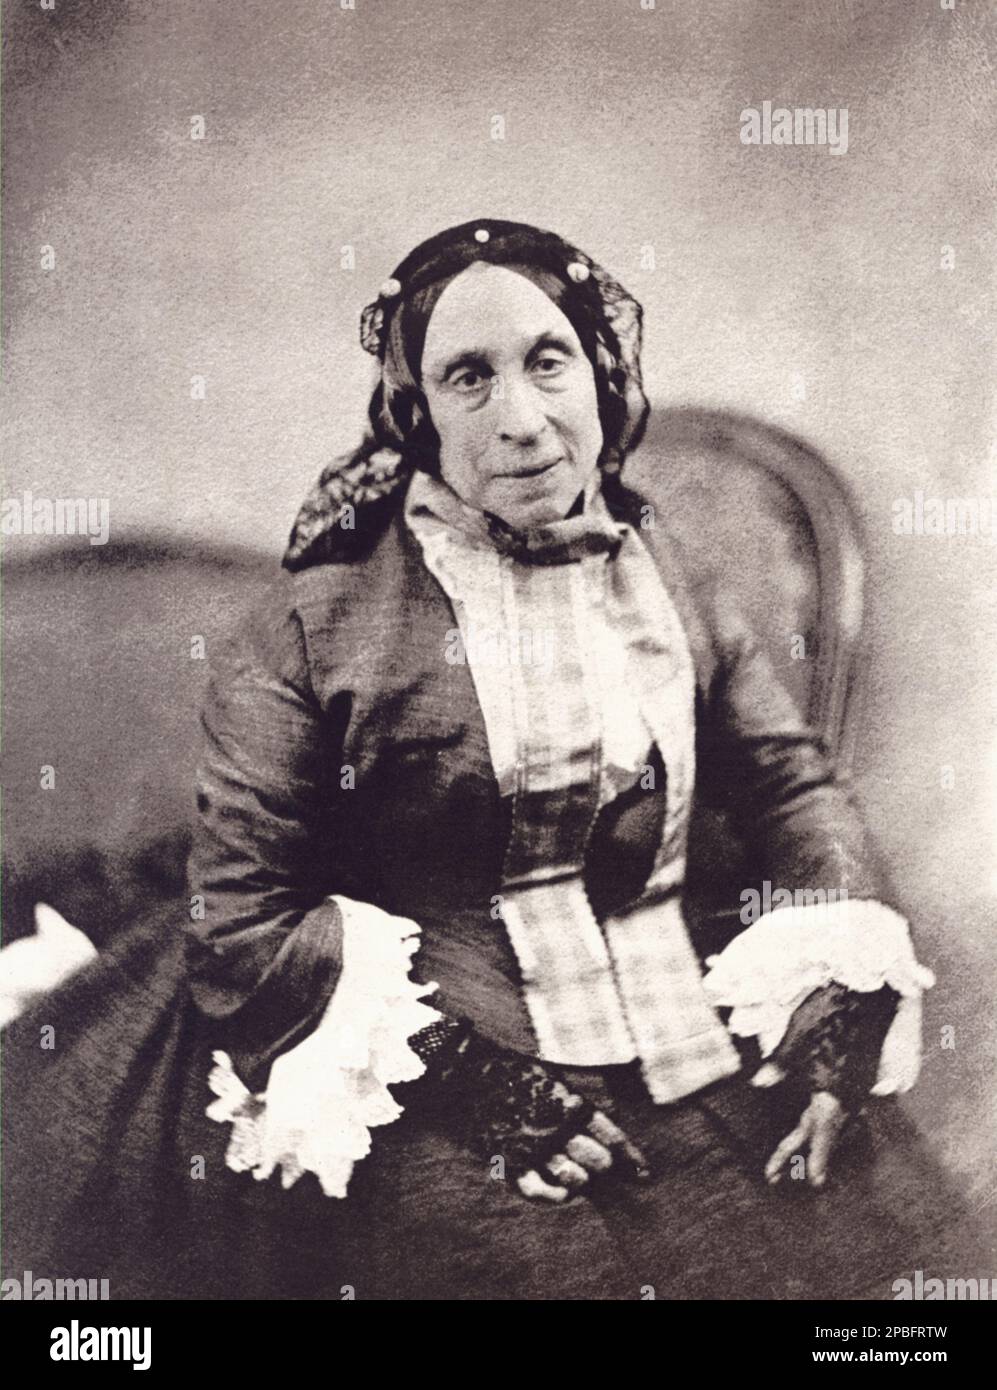 1855 ca : The french  actress and writer MARCELINE DESBORDES-VALMORE ( 1786 - 1859 ). Photo by NADAR , Paris - RITRATTO - PORTRAIT - engraving - incisione - SCRITTRICE - SCRITTORE -  POETESSA - POETA - POET - POESIA - POETRY - LETTERATURA - LITERATURE - letterato - DESBORDES VALMORE - TEATRO - THEATRE - THEATER - ATTRIce - DONNA ANZIANA VECCHIA - ancient old woman ----  Archivio GBB Stock Photo